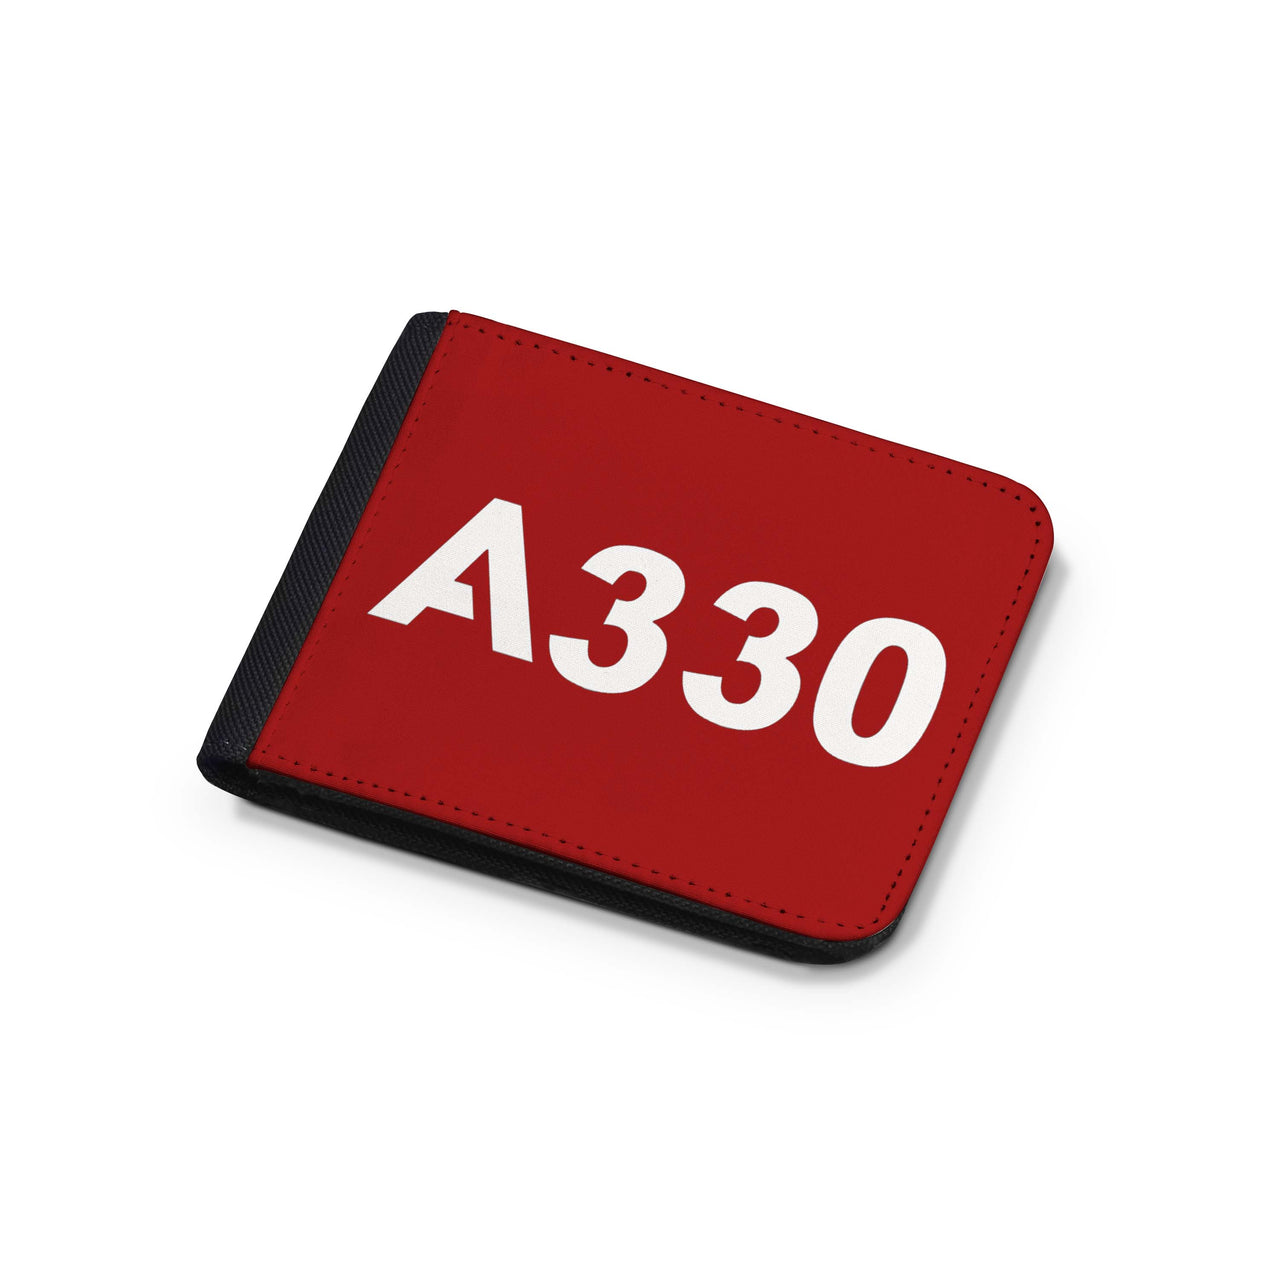 A330 Flat Text Designed Wallets